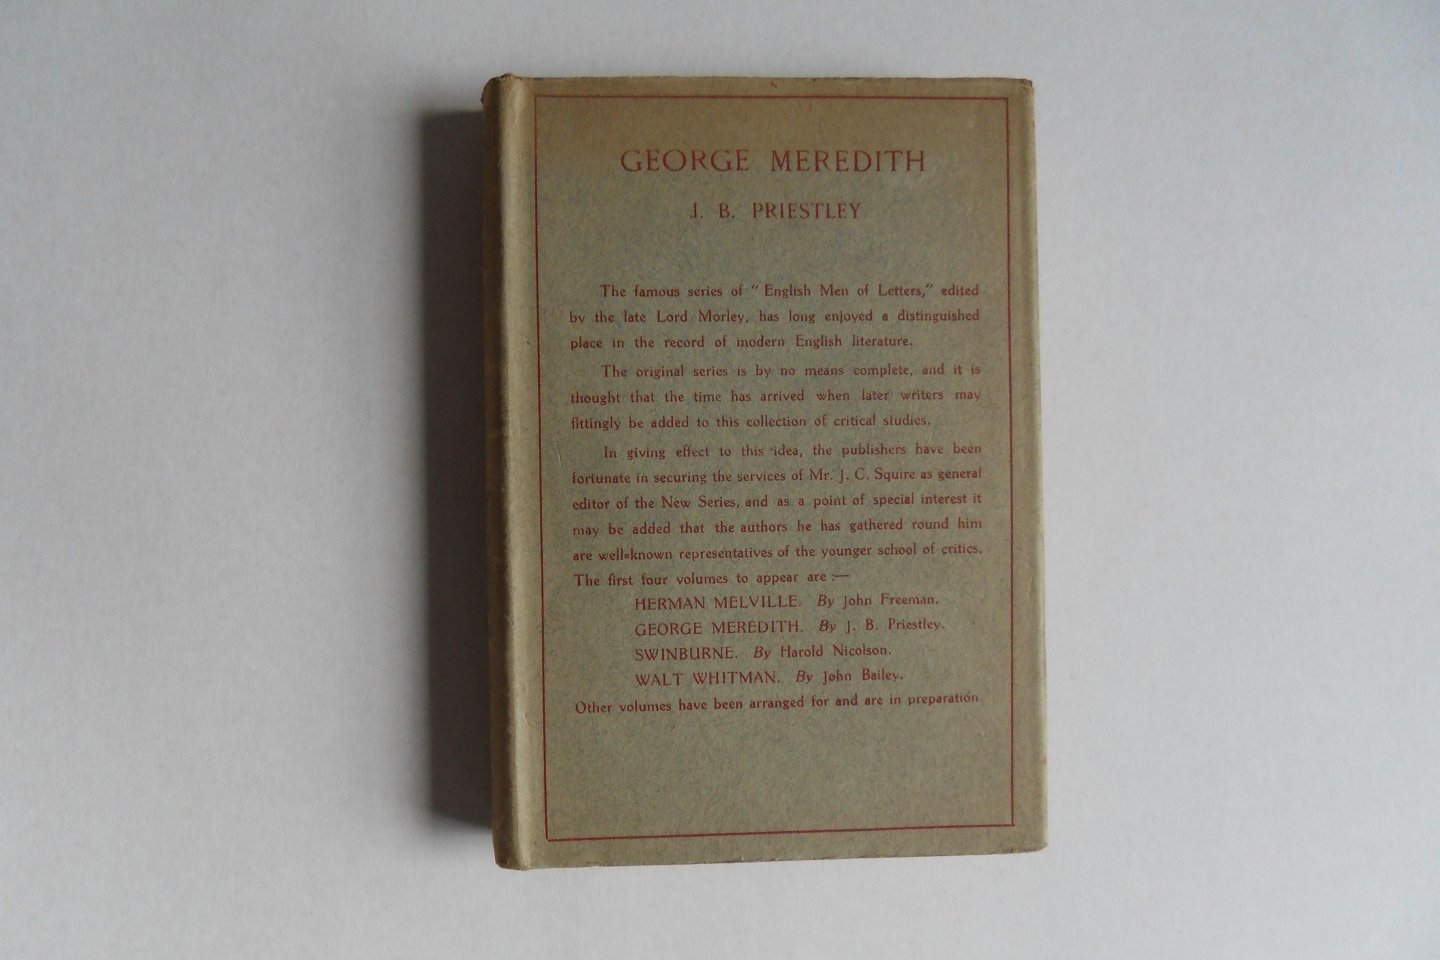 Priestley, J.B. - George Meredith. [ FIRST edition ].